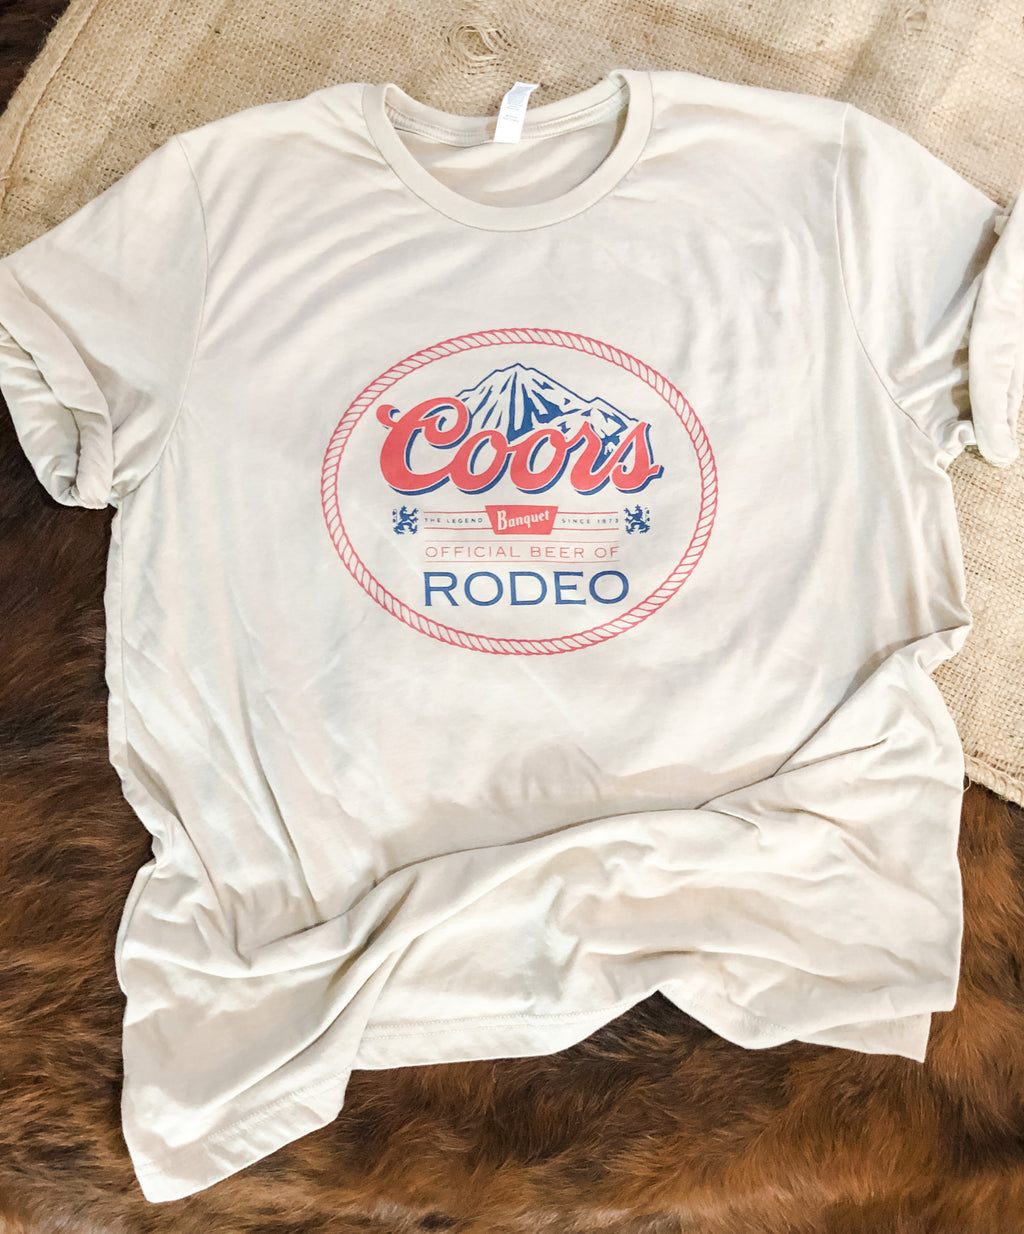 Coors Rodeo Top Design